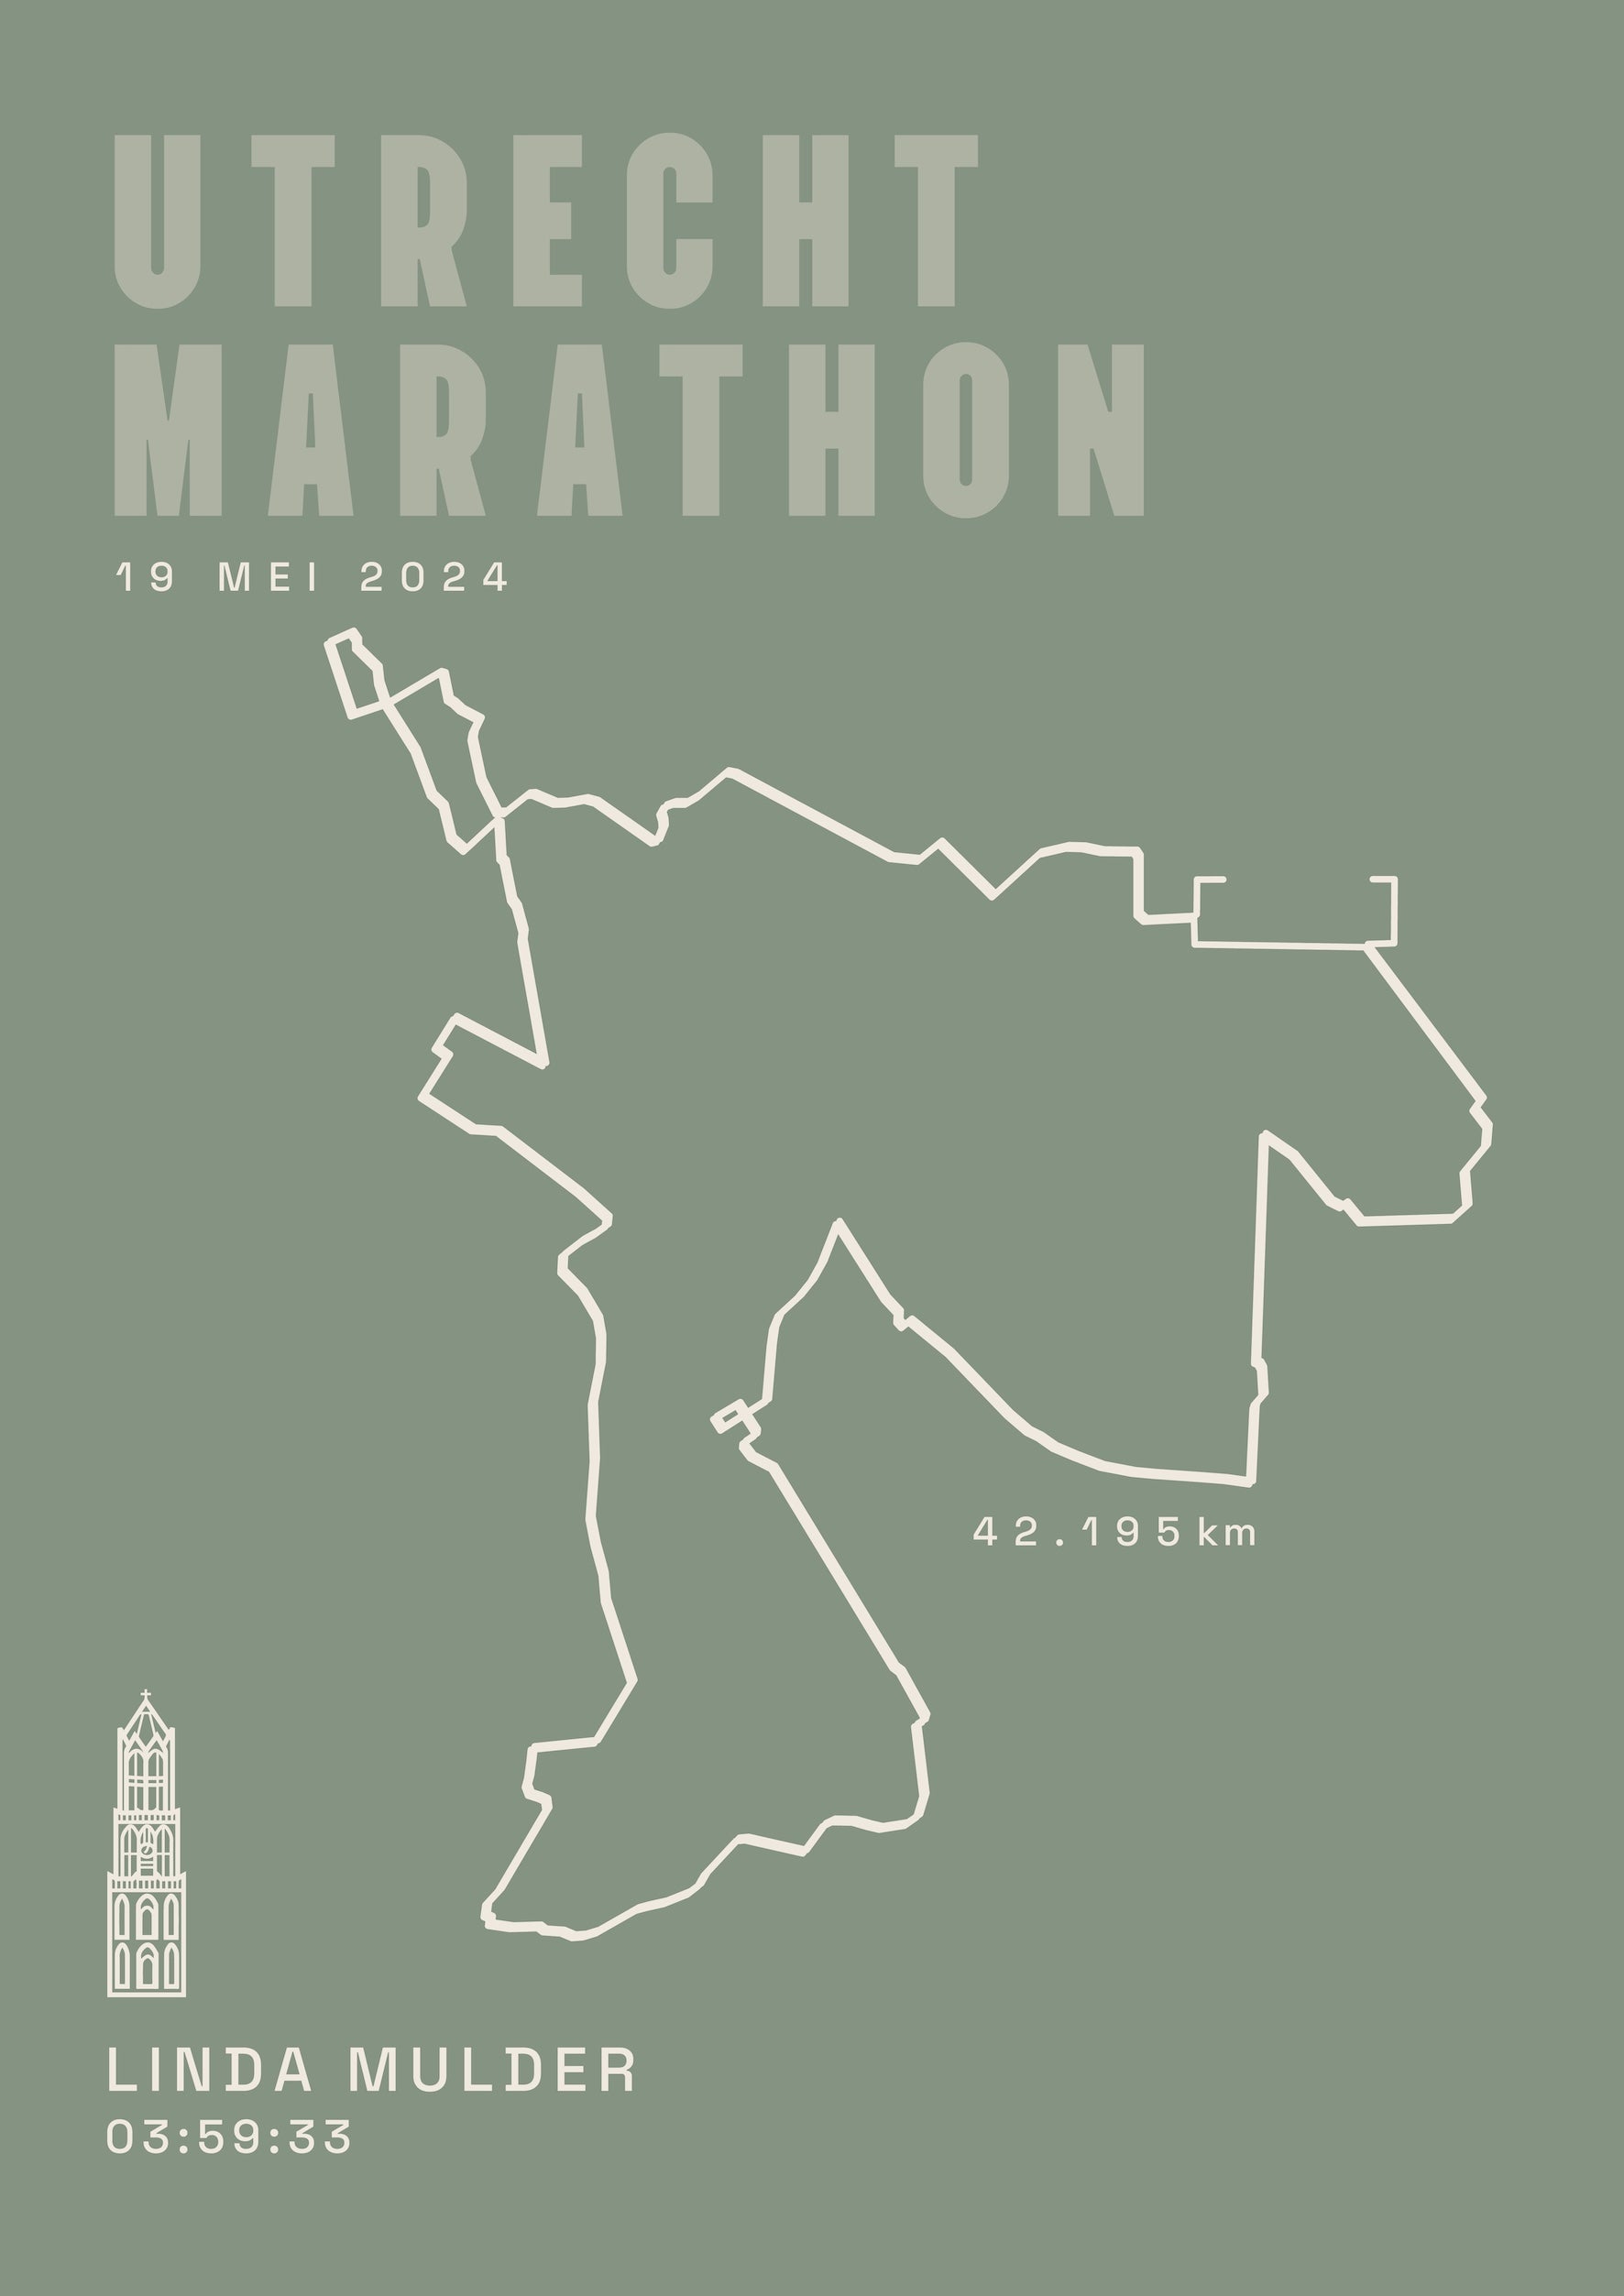 Utrecht Marathon - Classic Solid - Poster